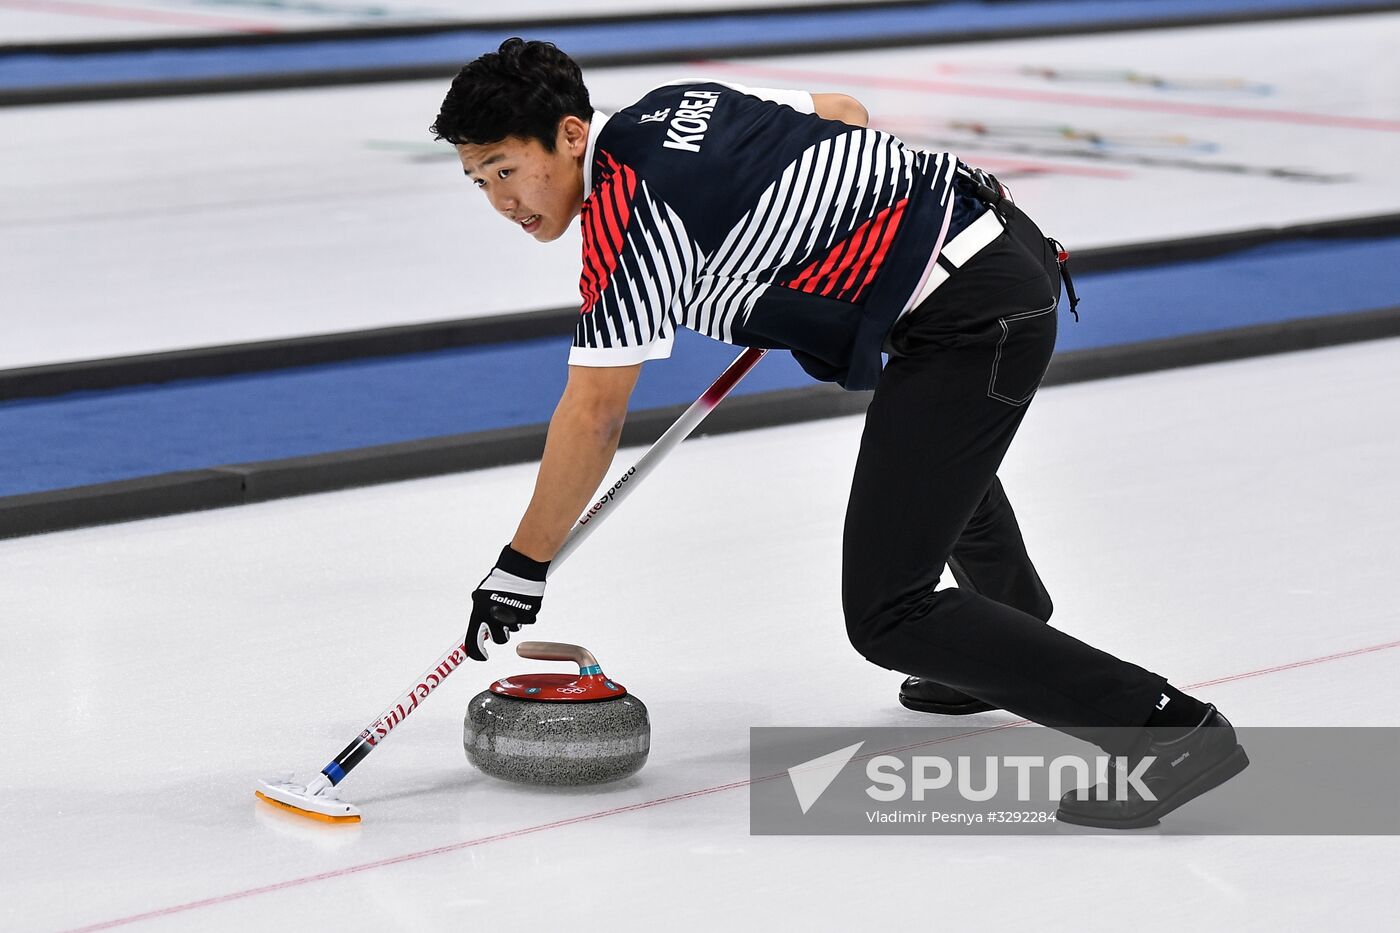 Winter Olympics 2018. Curling. Mixed doubles. Republic of Korea vs. OAR